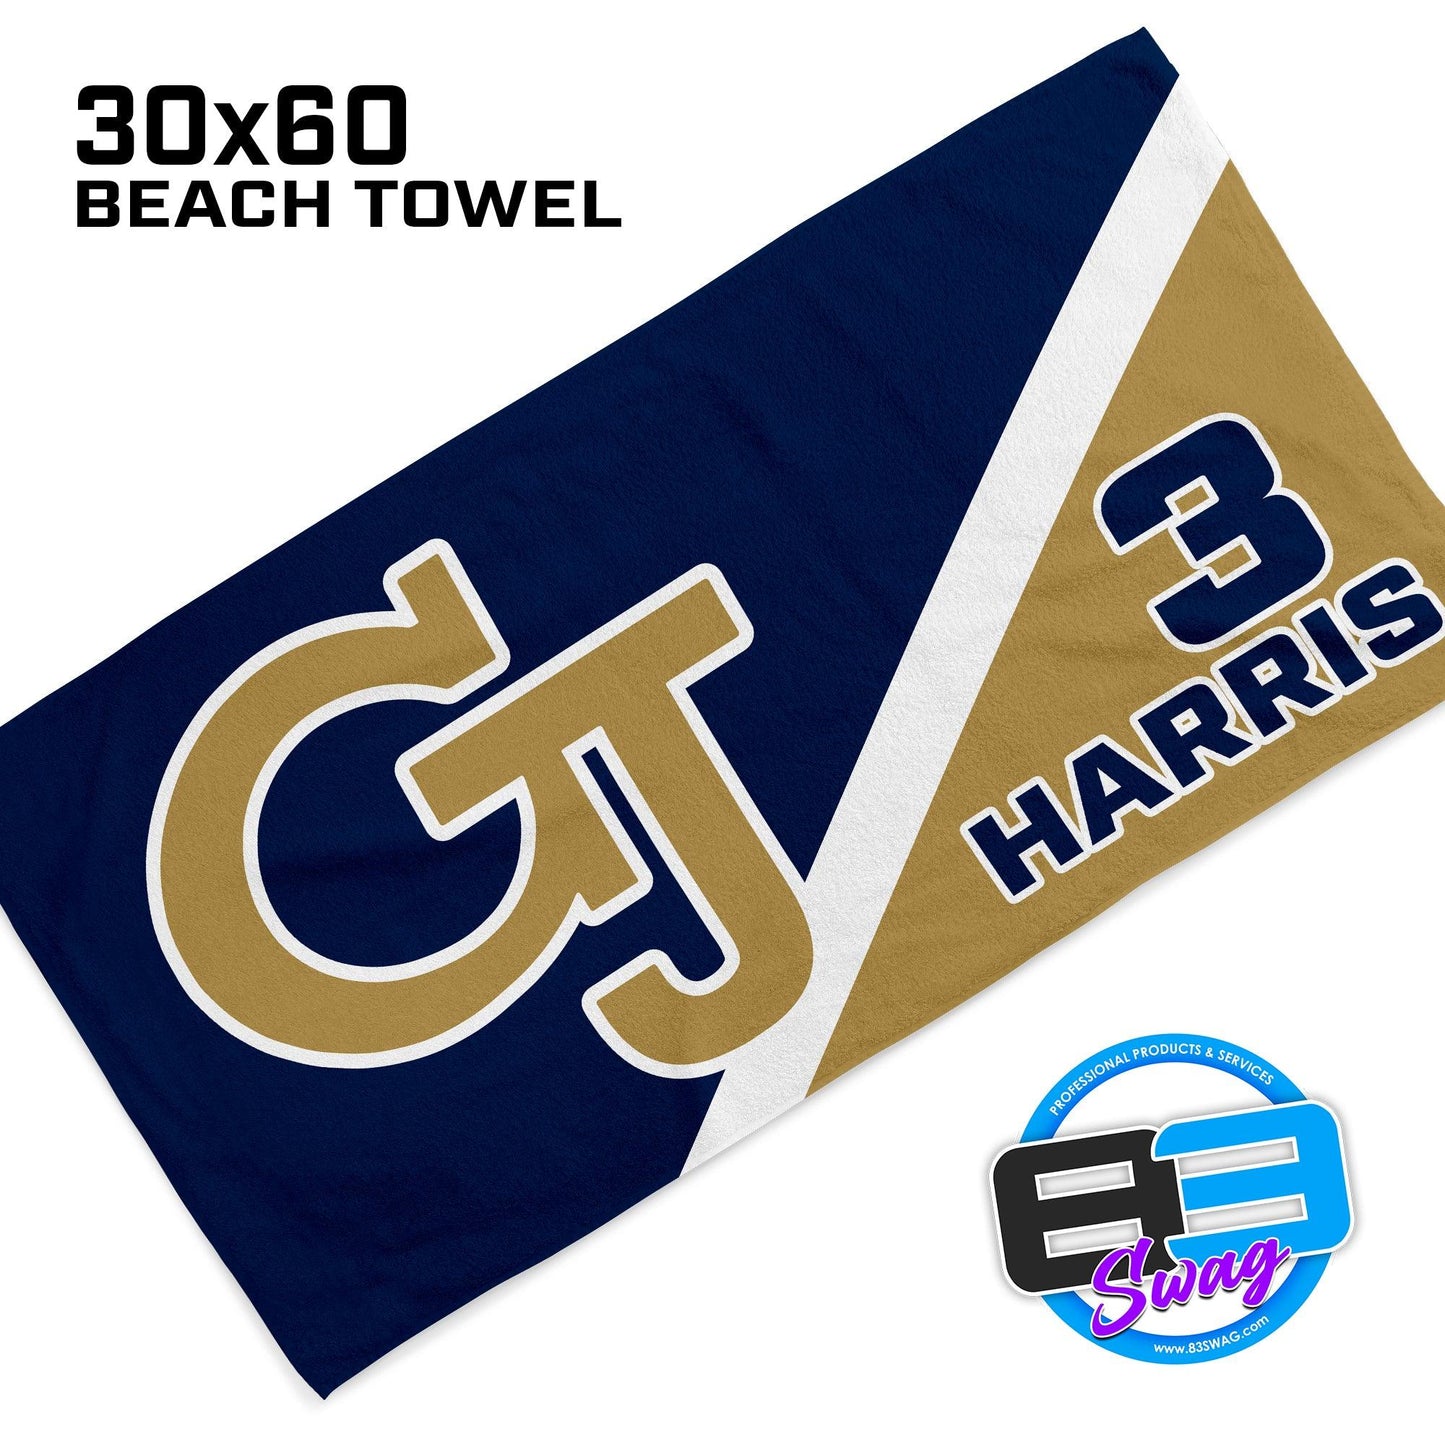 30"x60" Beach Towel - Jackets - 83Swag